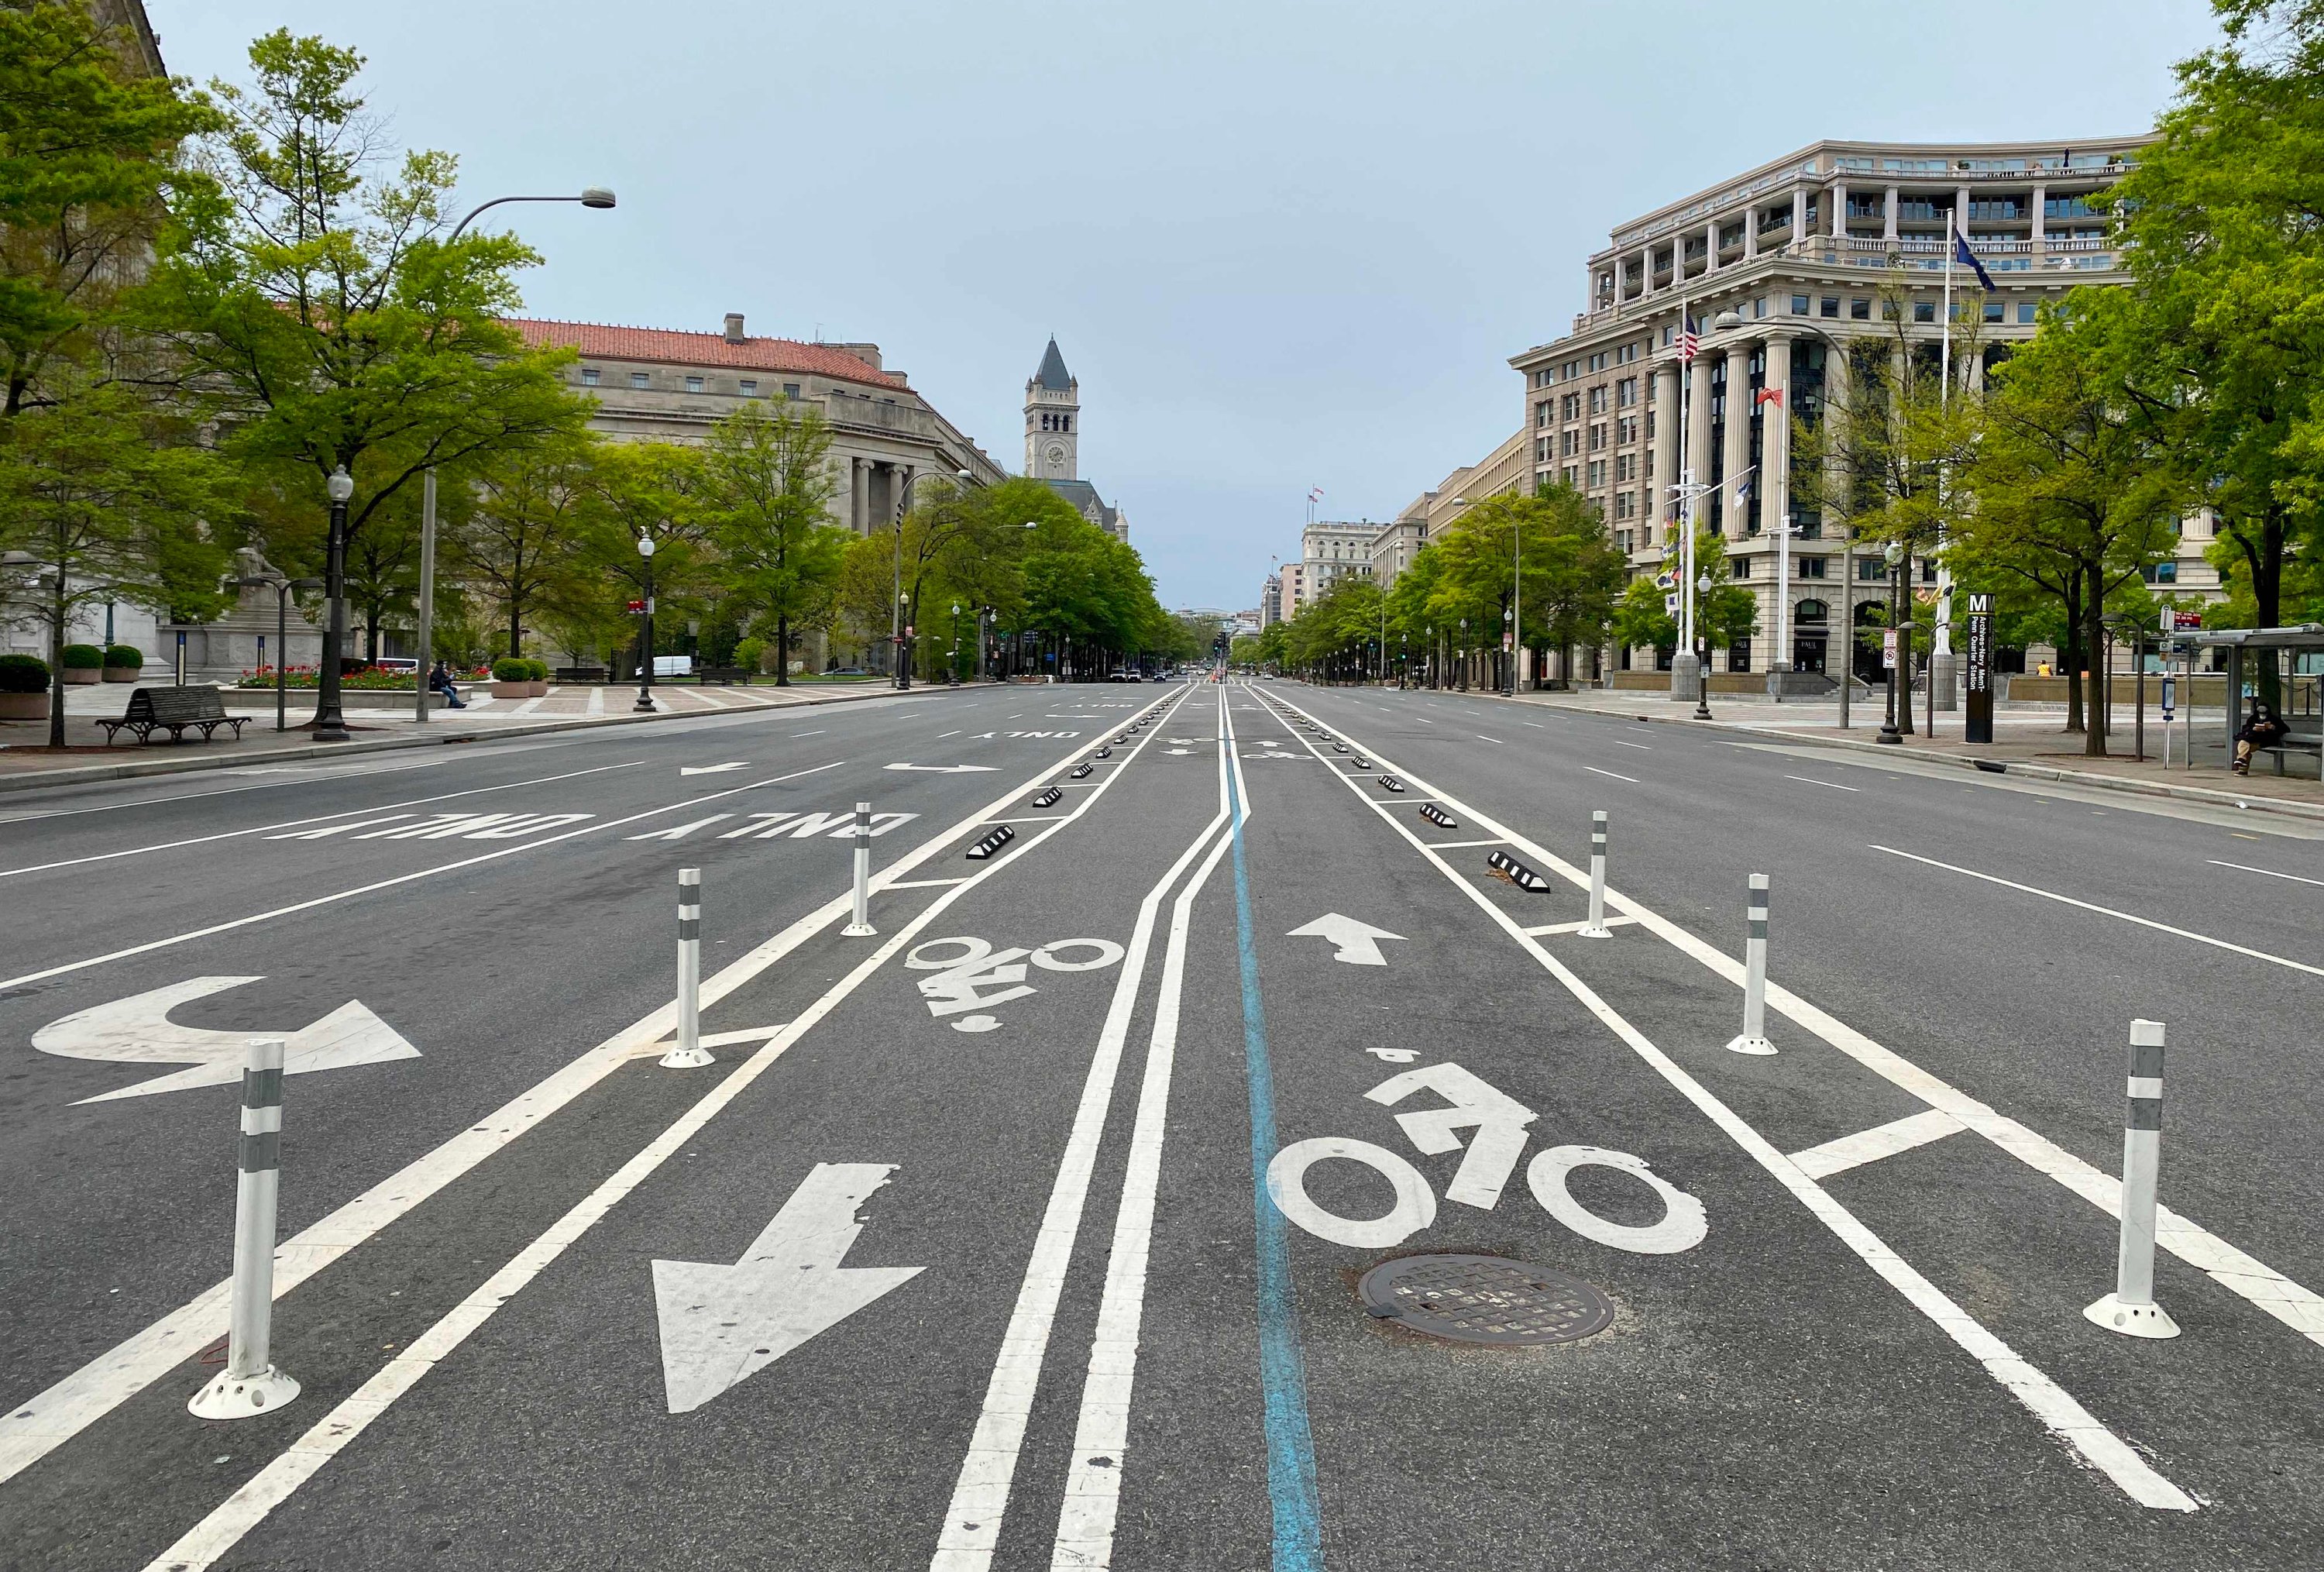 Pennsylvania Avenue in Washington, DC, is empty on April 17, 2020, during the coronavirus pandemic. (AFP Photo)